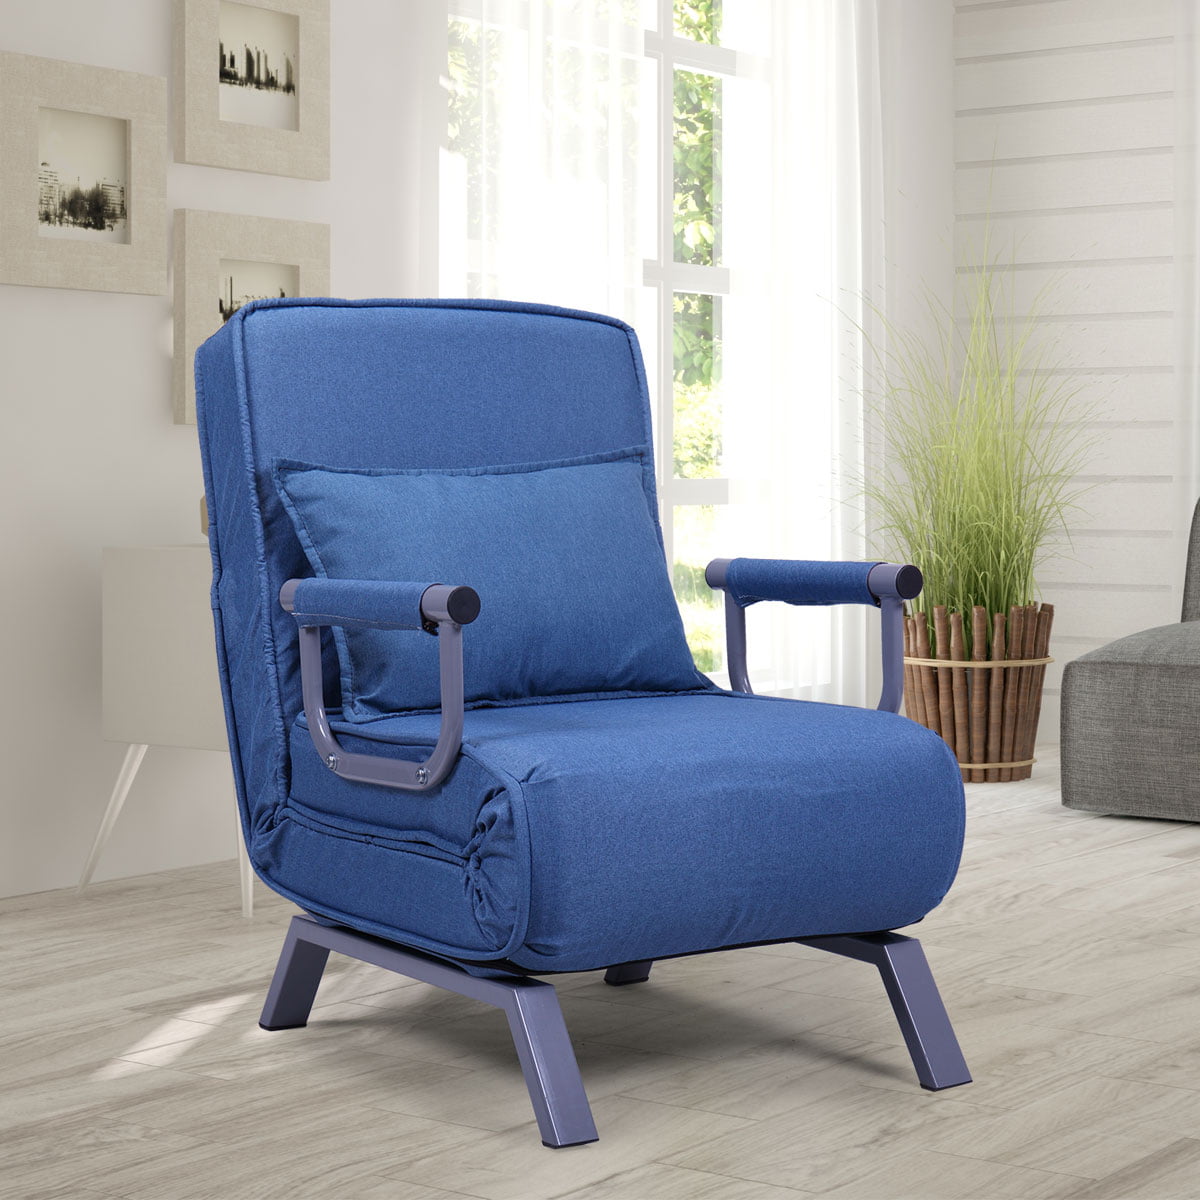 Jaxpety Fabric Folding Chaise Lounge Convertible Single Sleeper Sofa